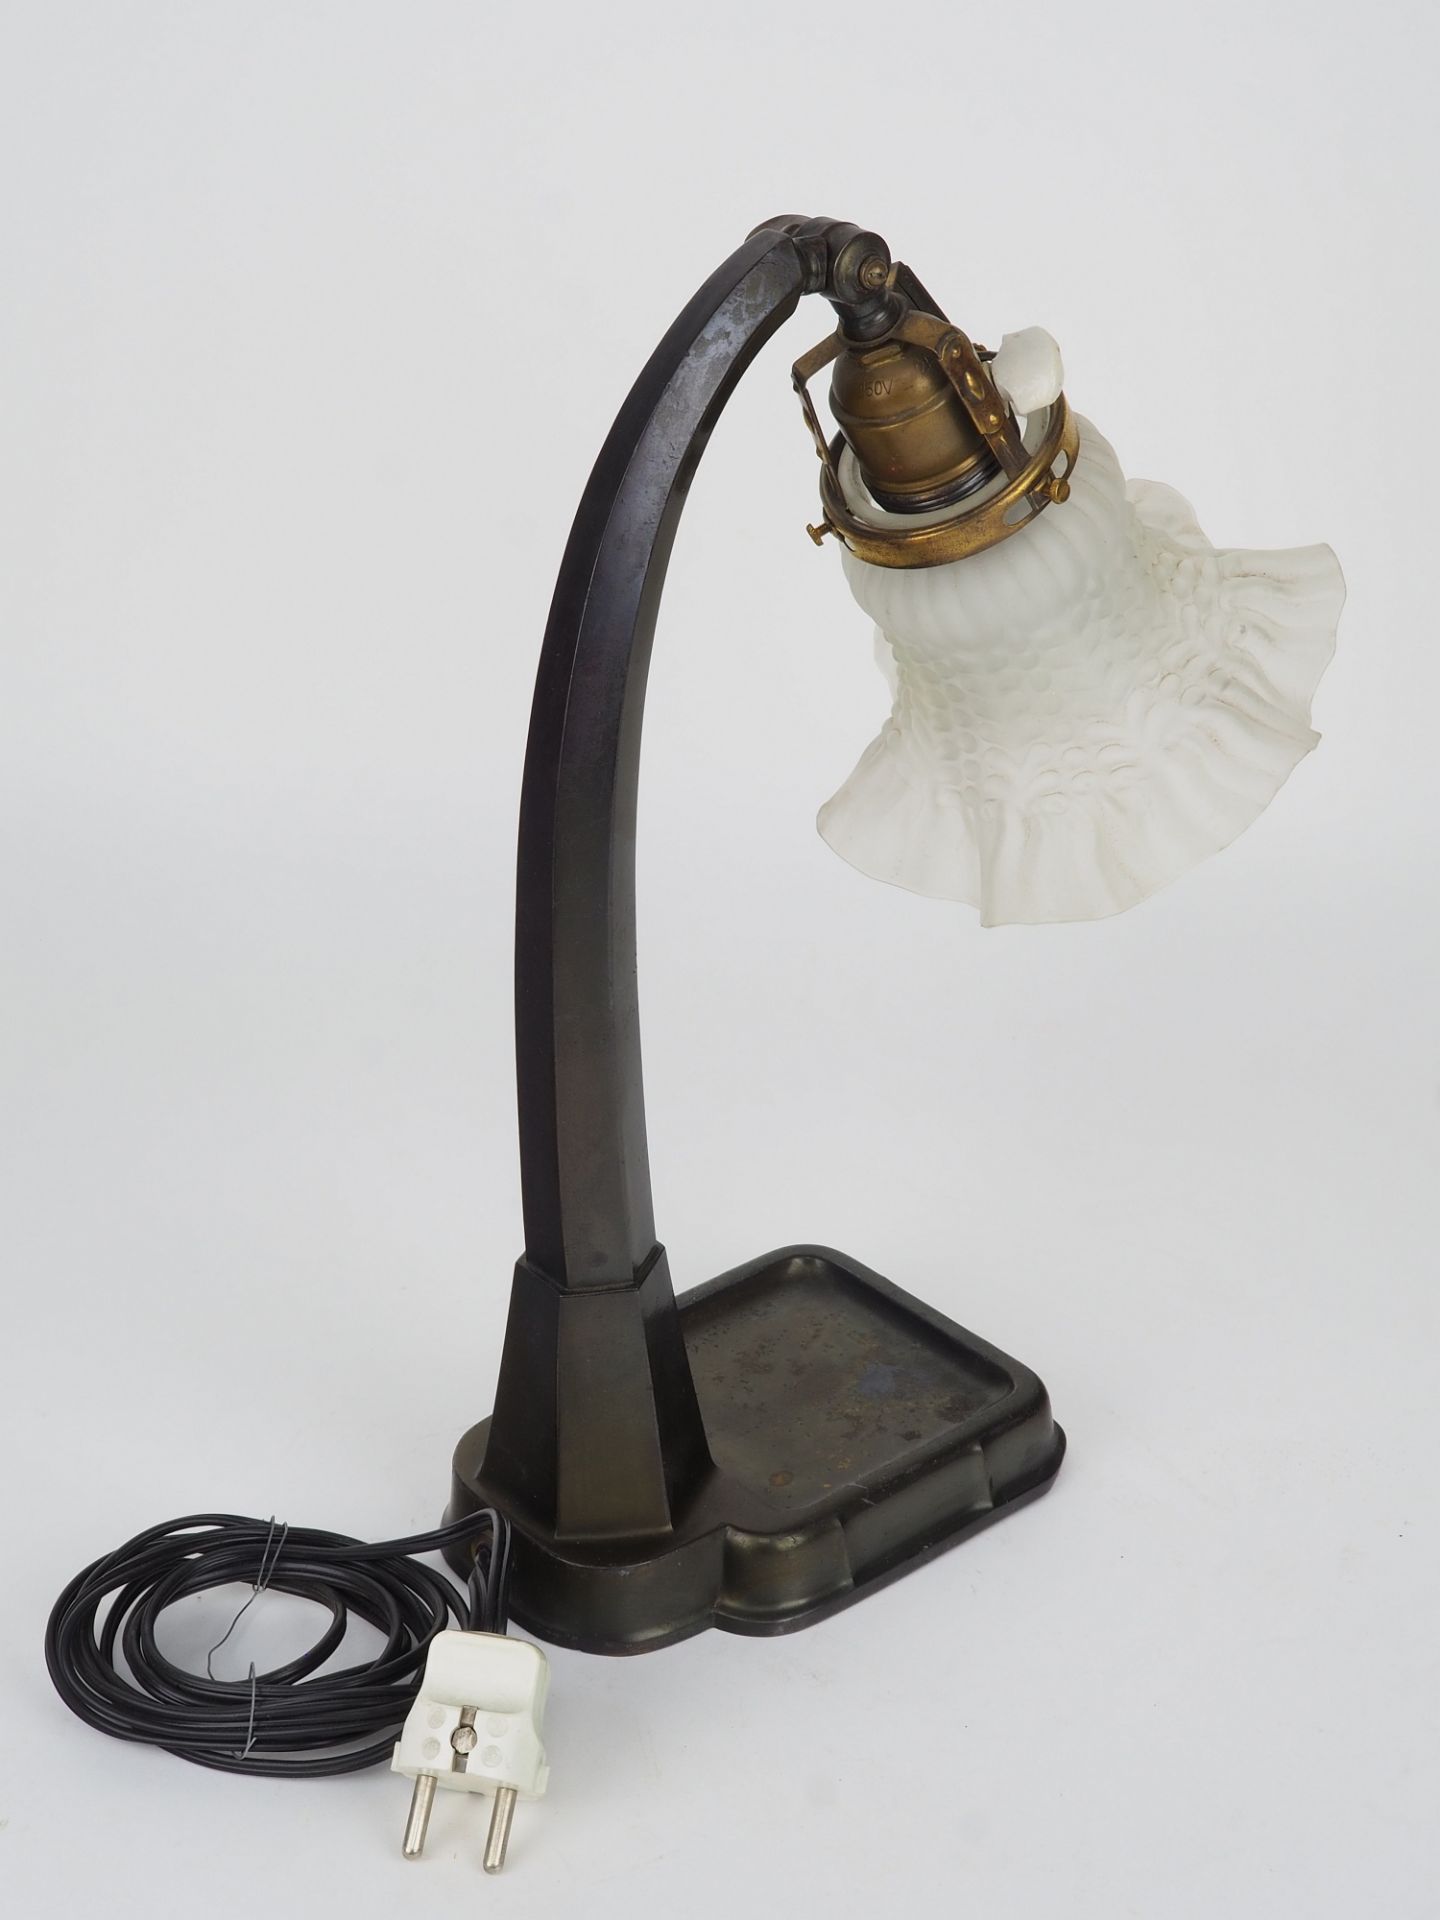 Desk lamp 1930s - Image 2 of 3